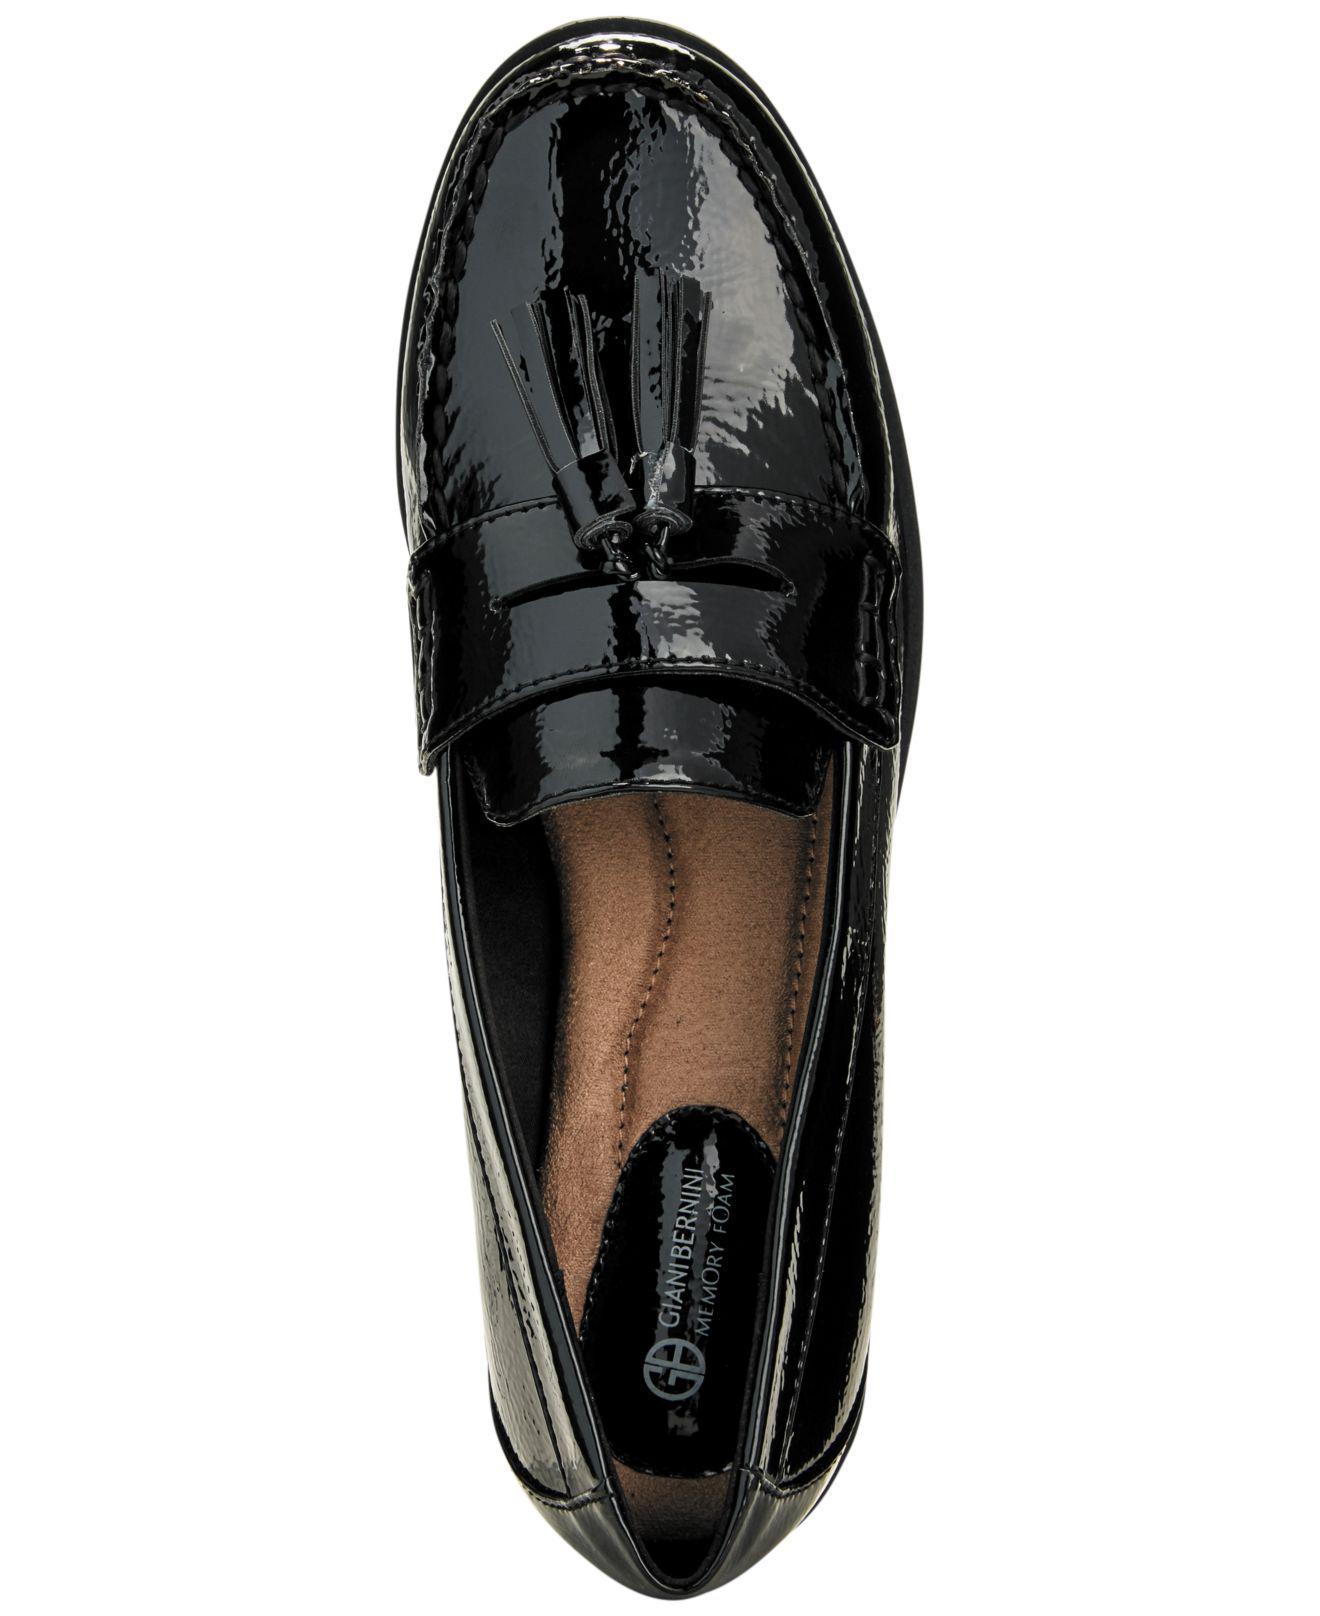 Giani Bernini Leather Mauwe Slipon Loafers in Black